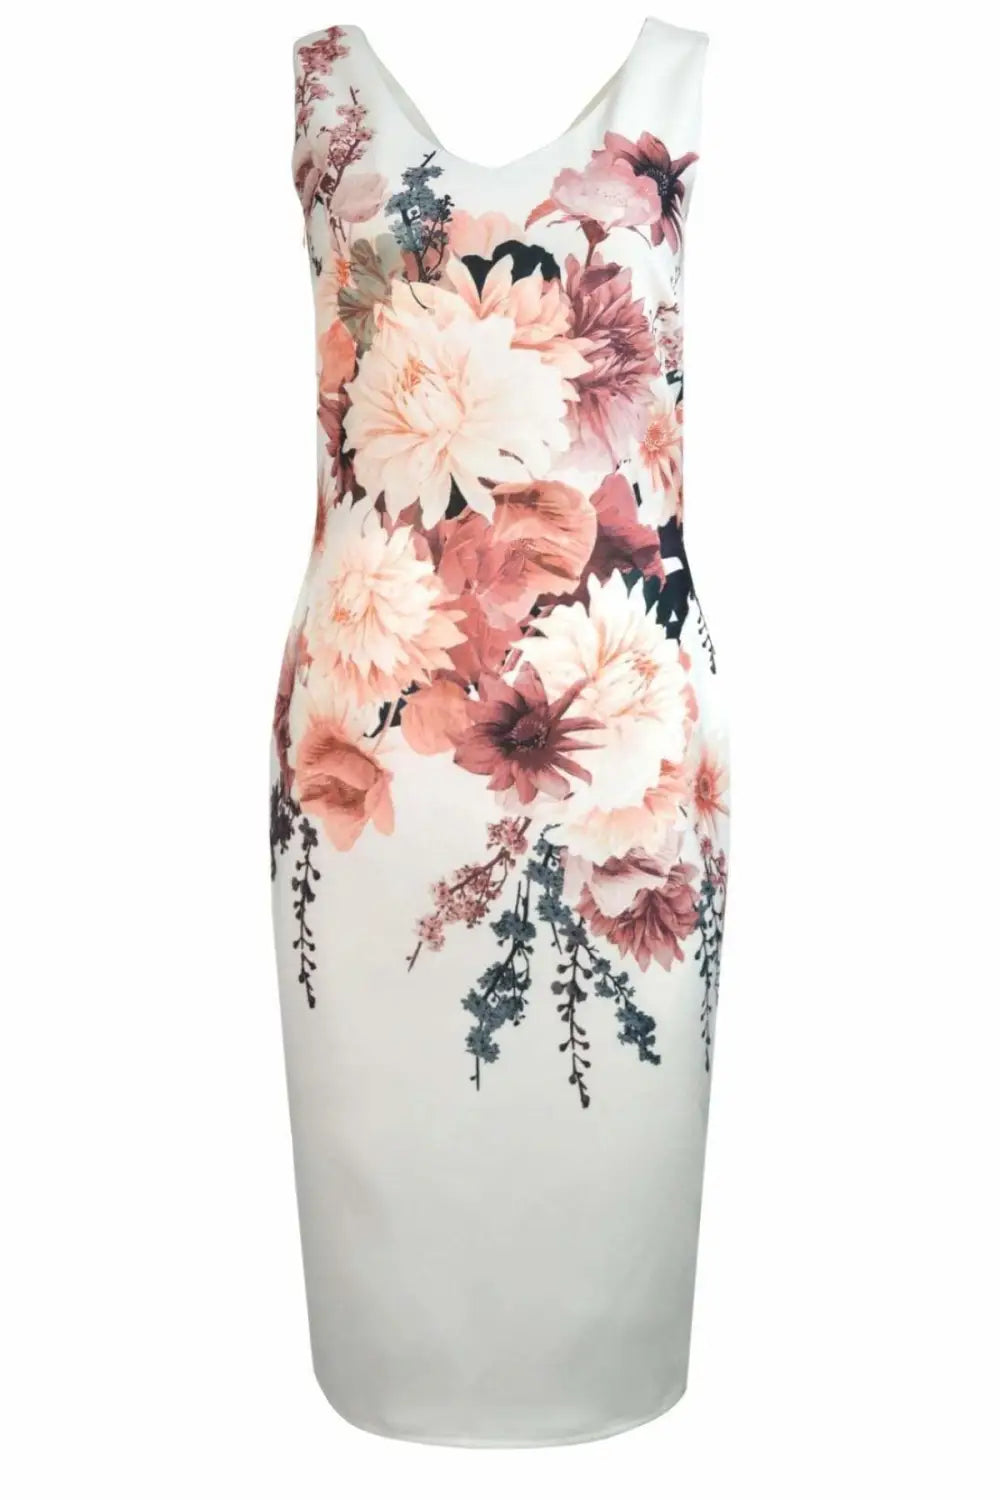 M&Co Floral Sleeveless Dress